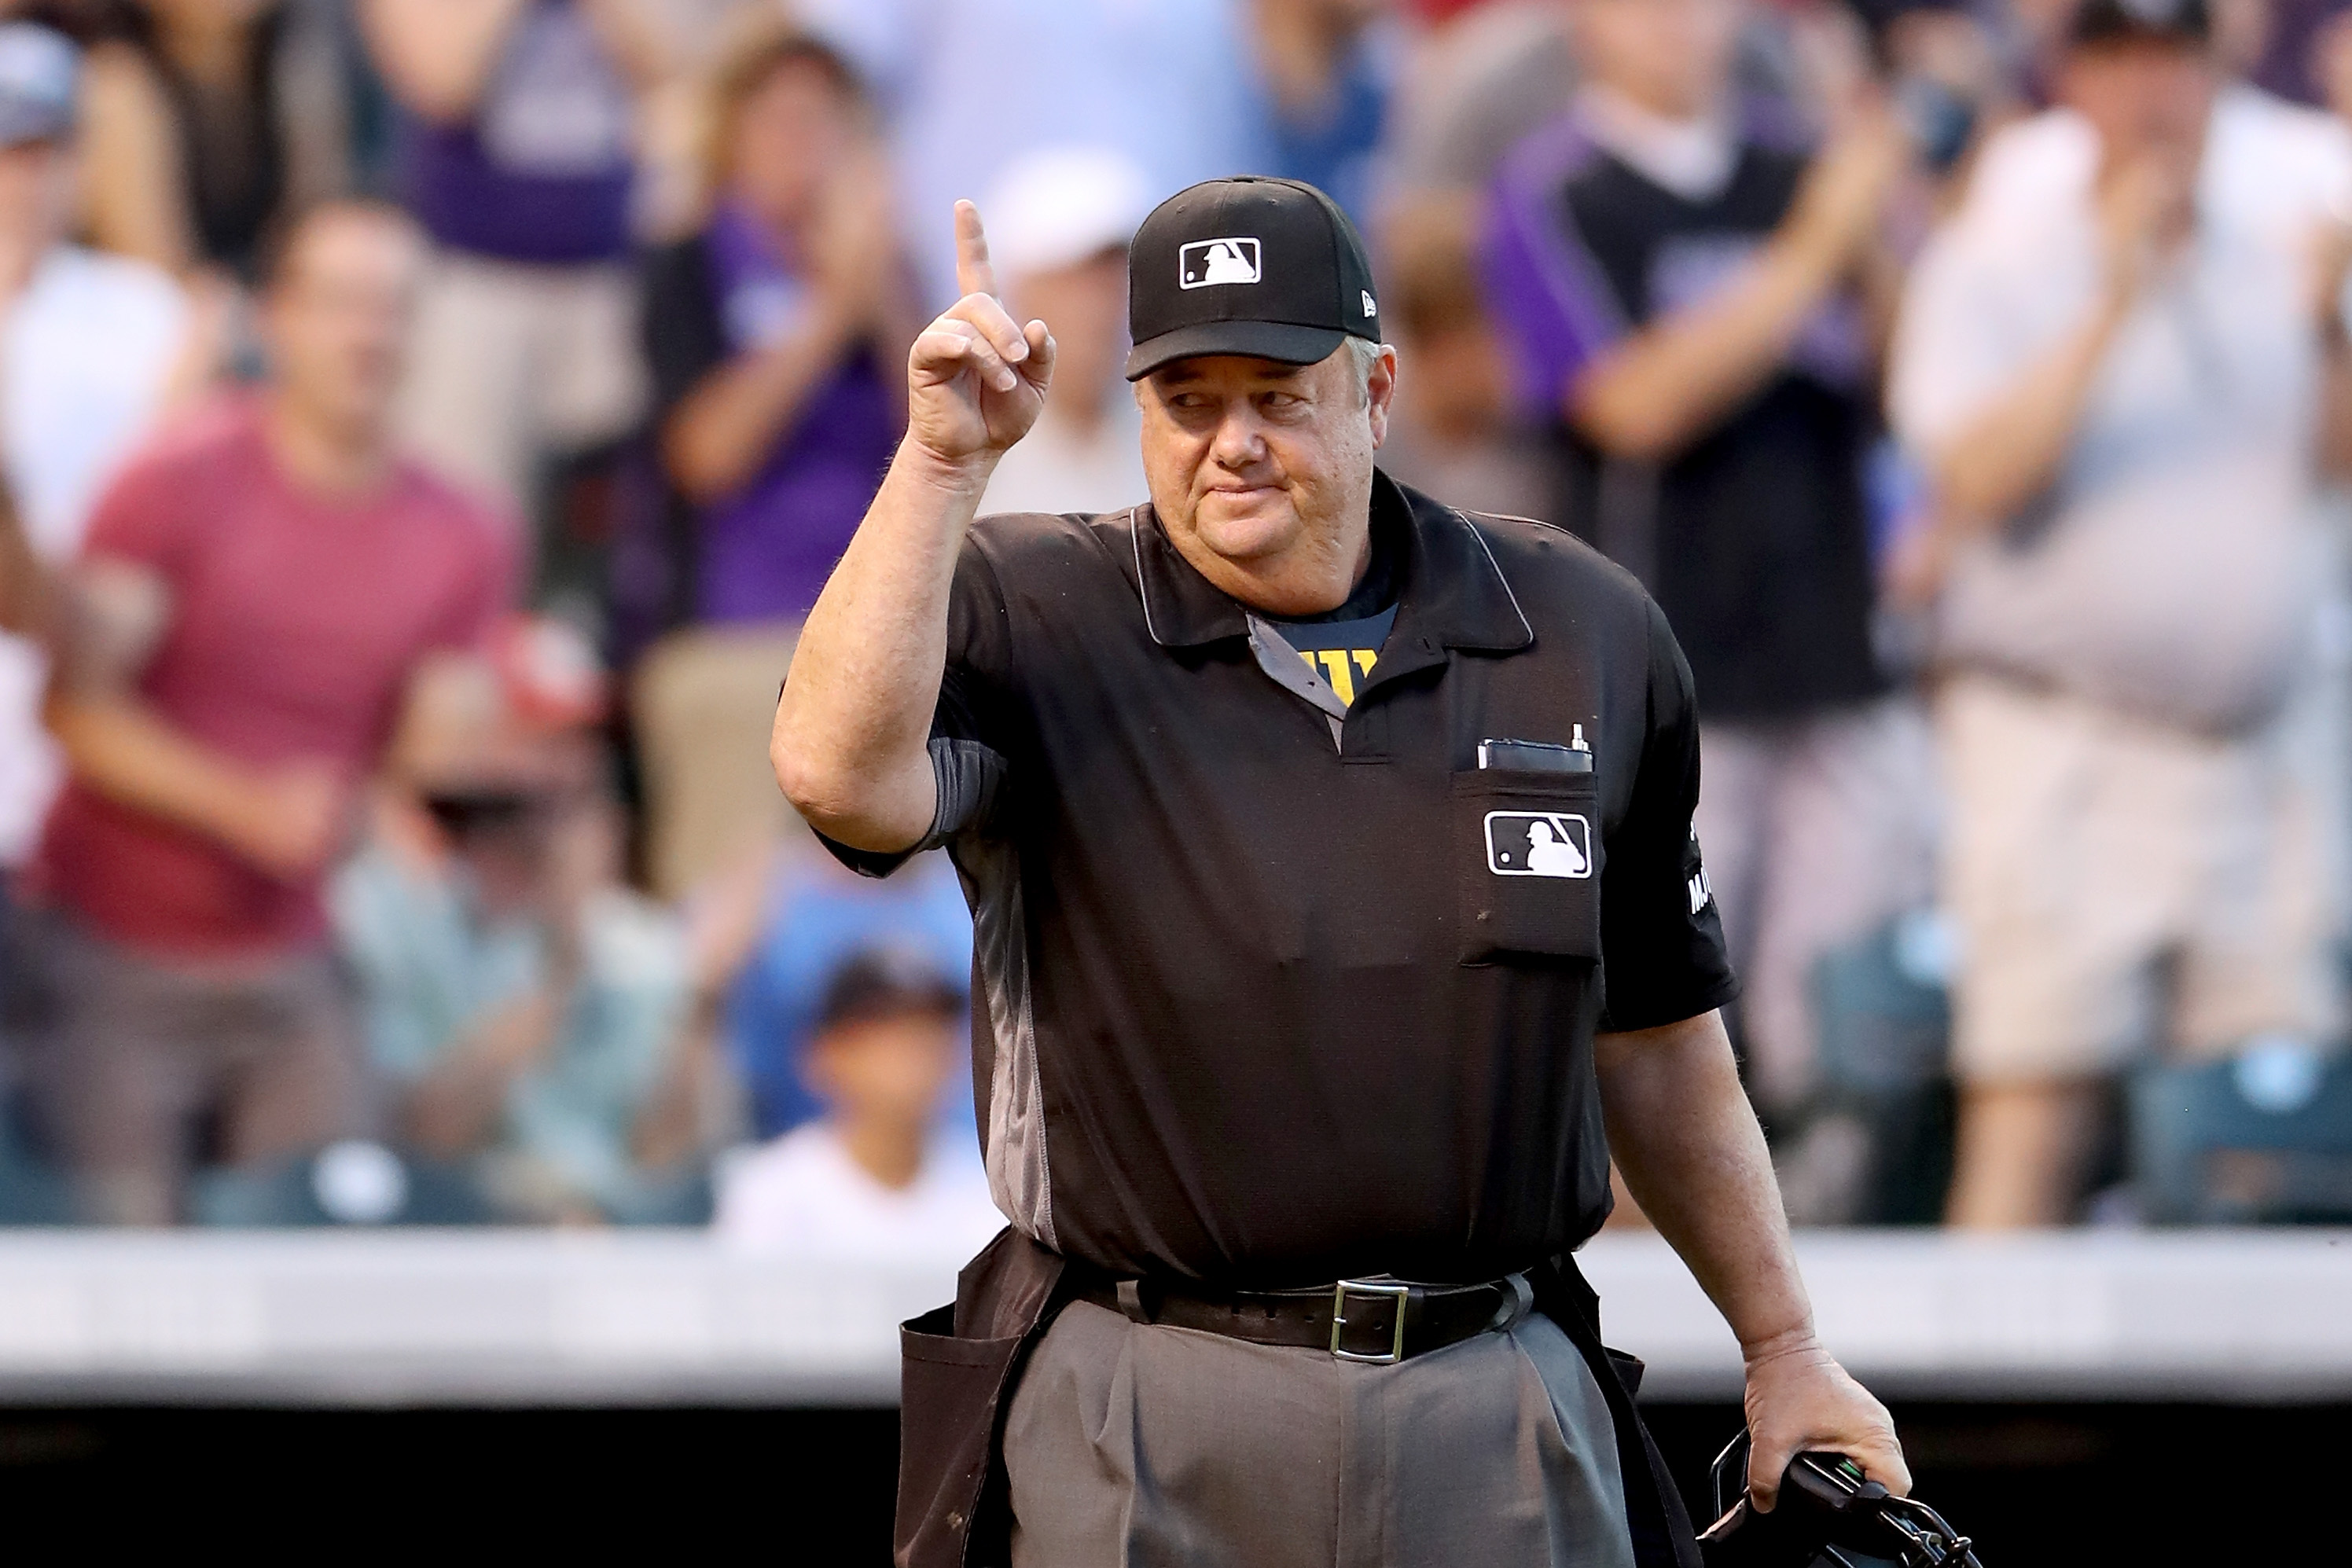 MLB umpire Joe West pranked with braille menu at Minnesota